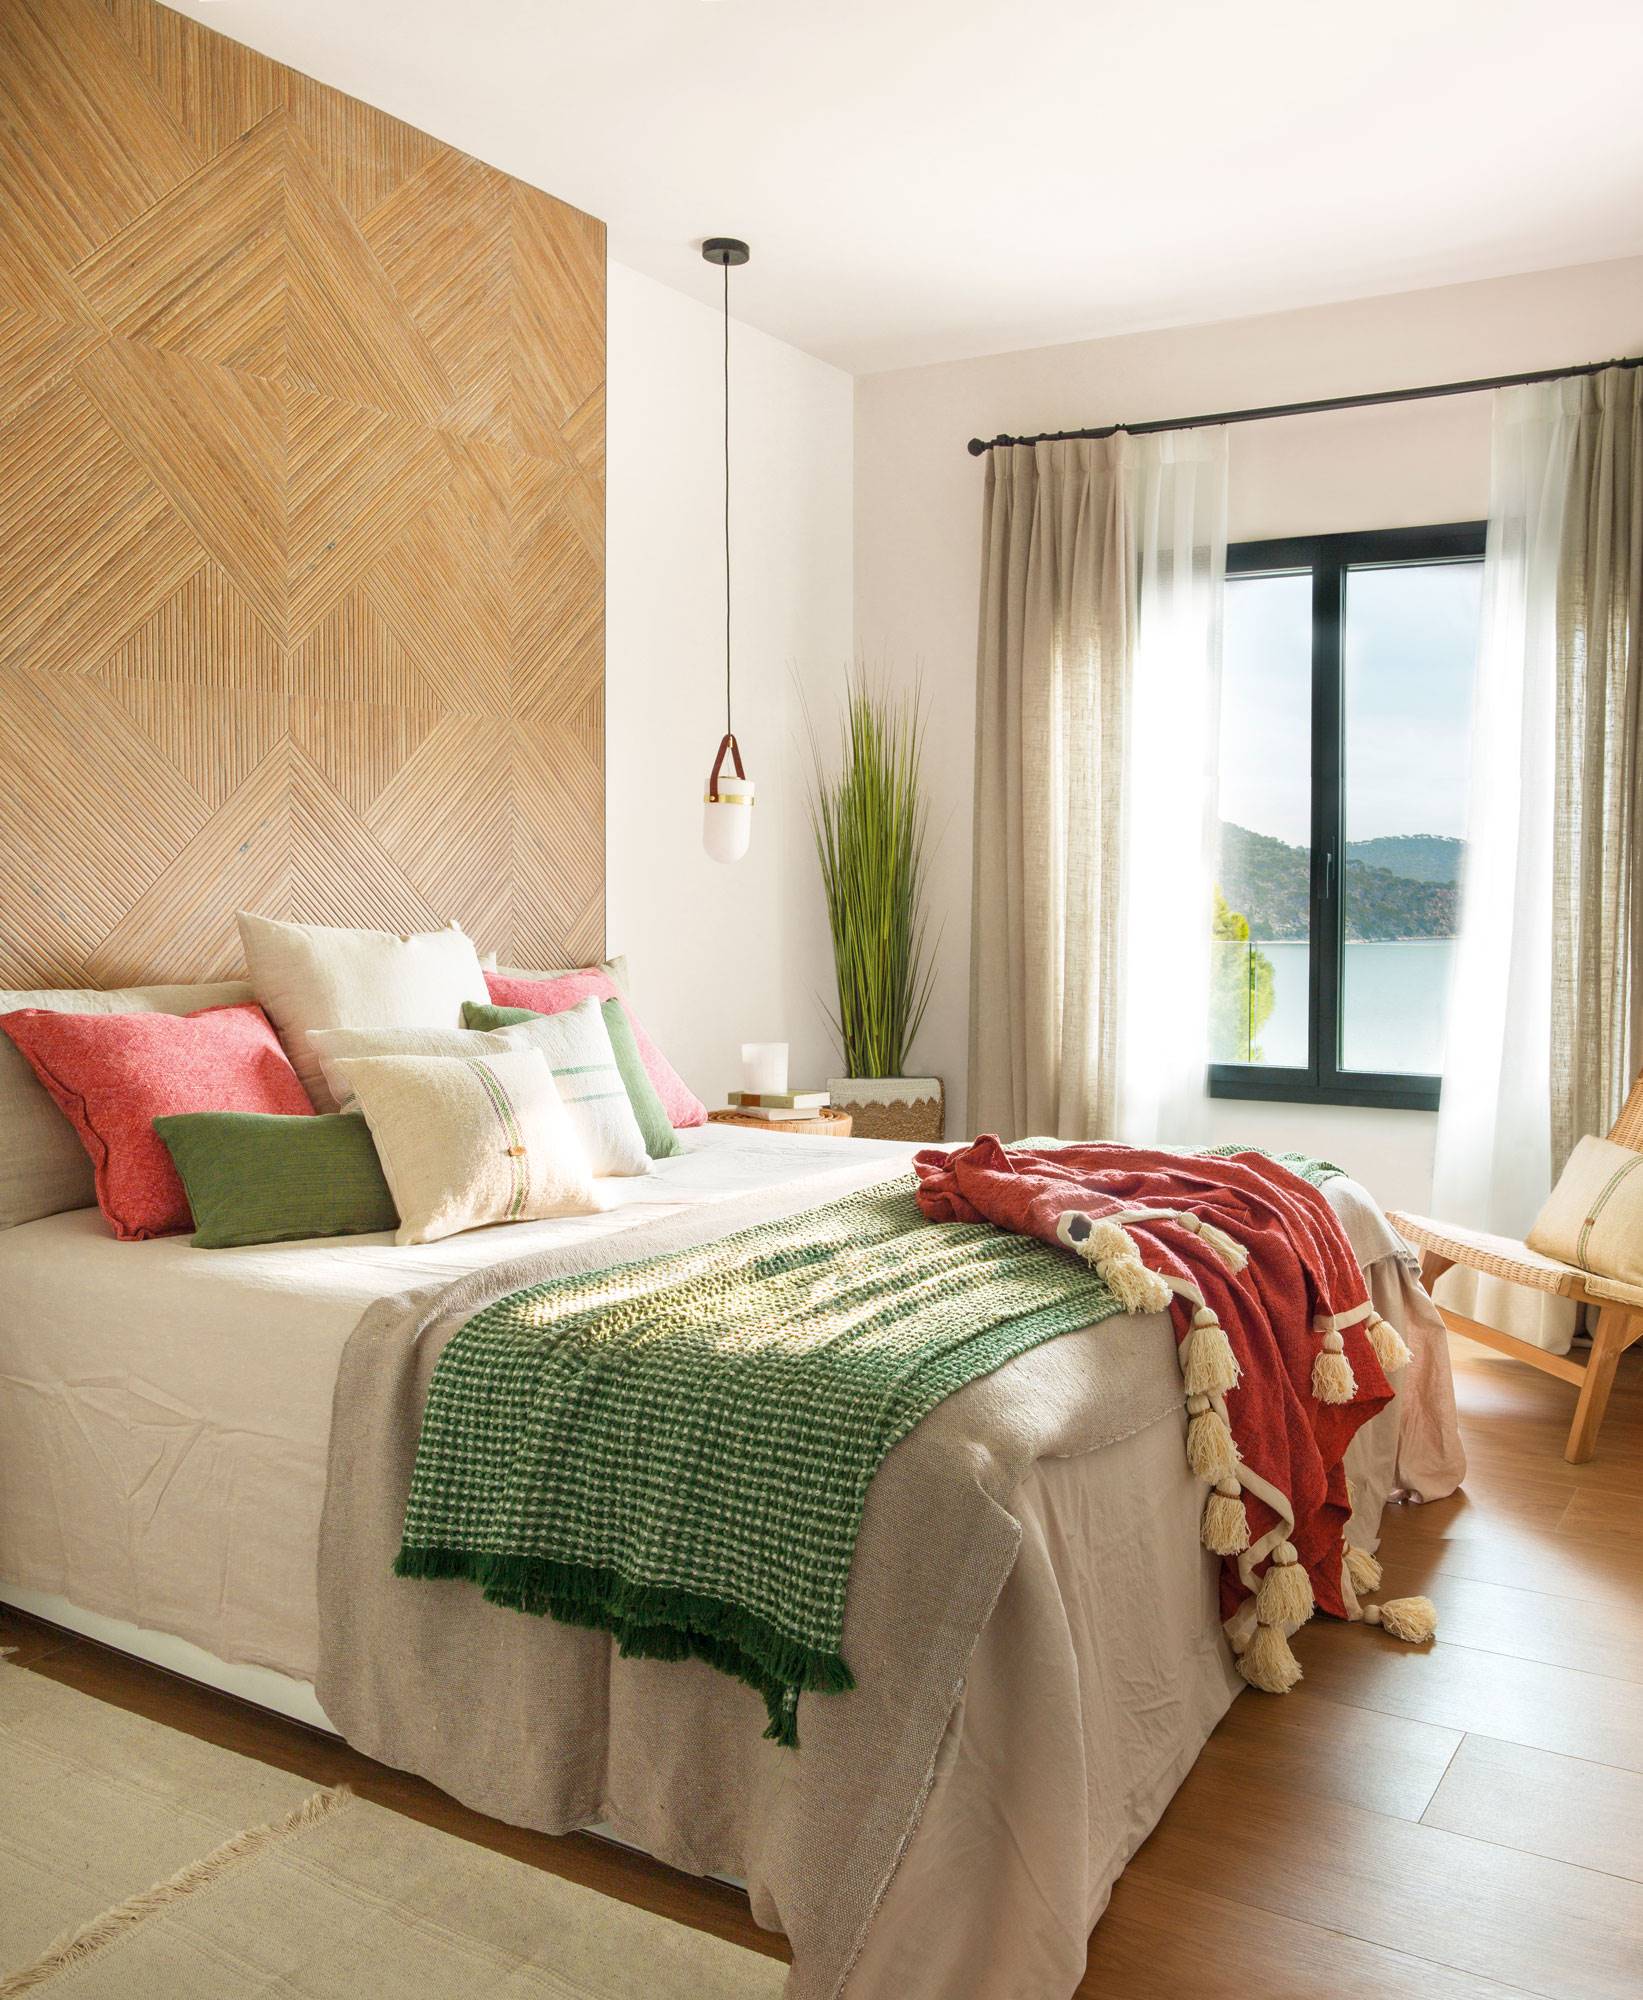 Dormitorio con cabecero revestido con baldosa con acabado en madera.